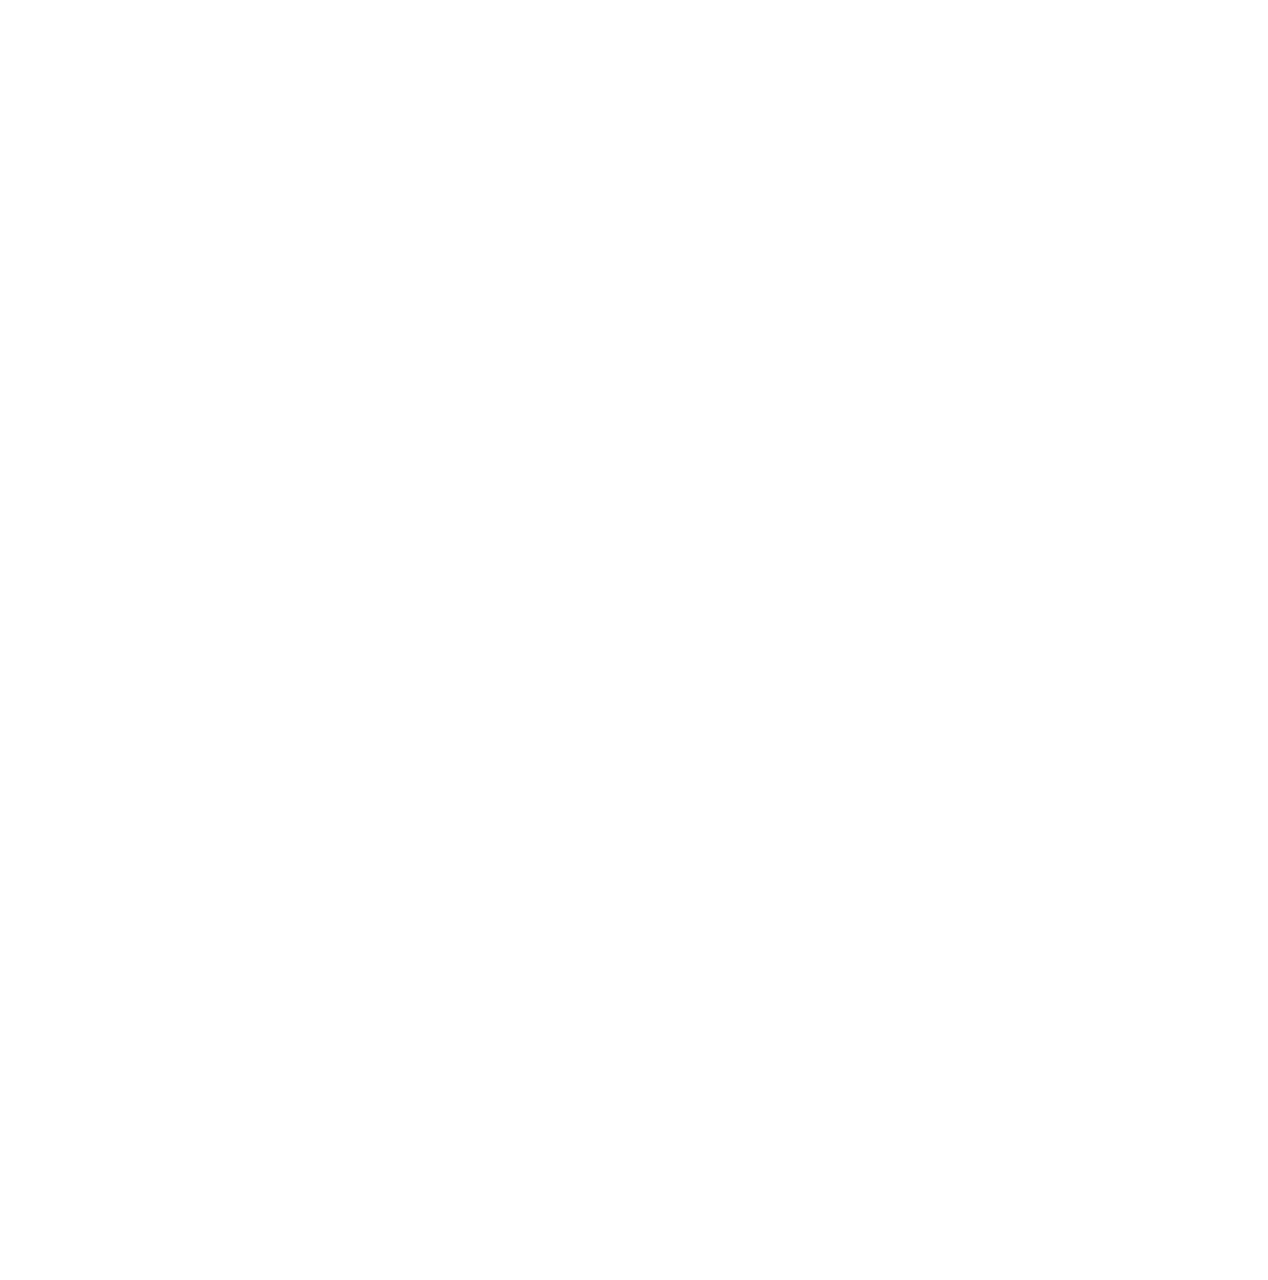 Remax Diamond